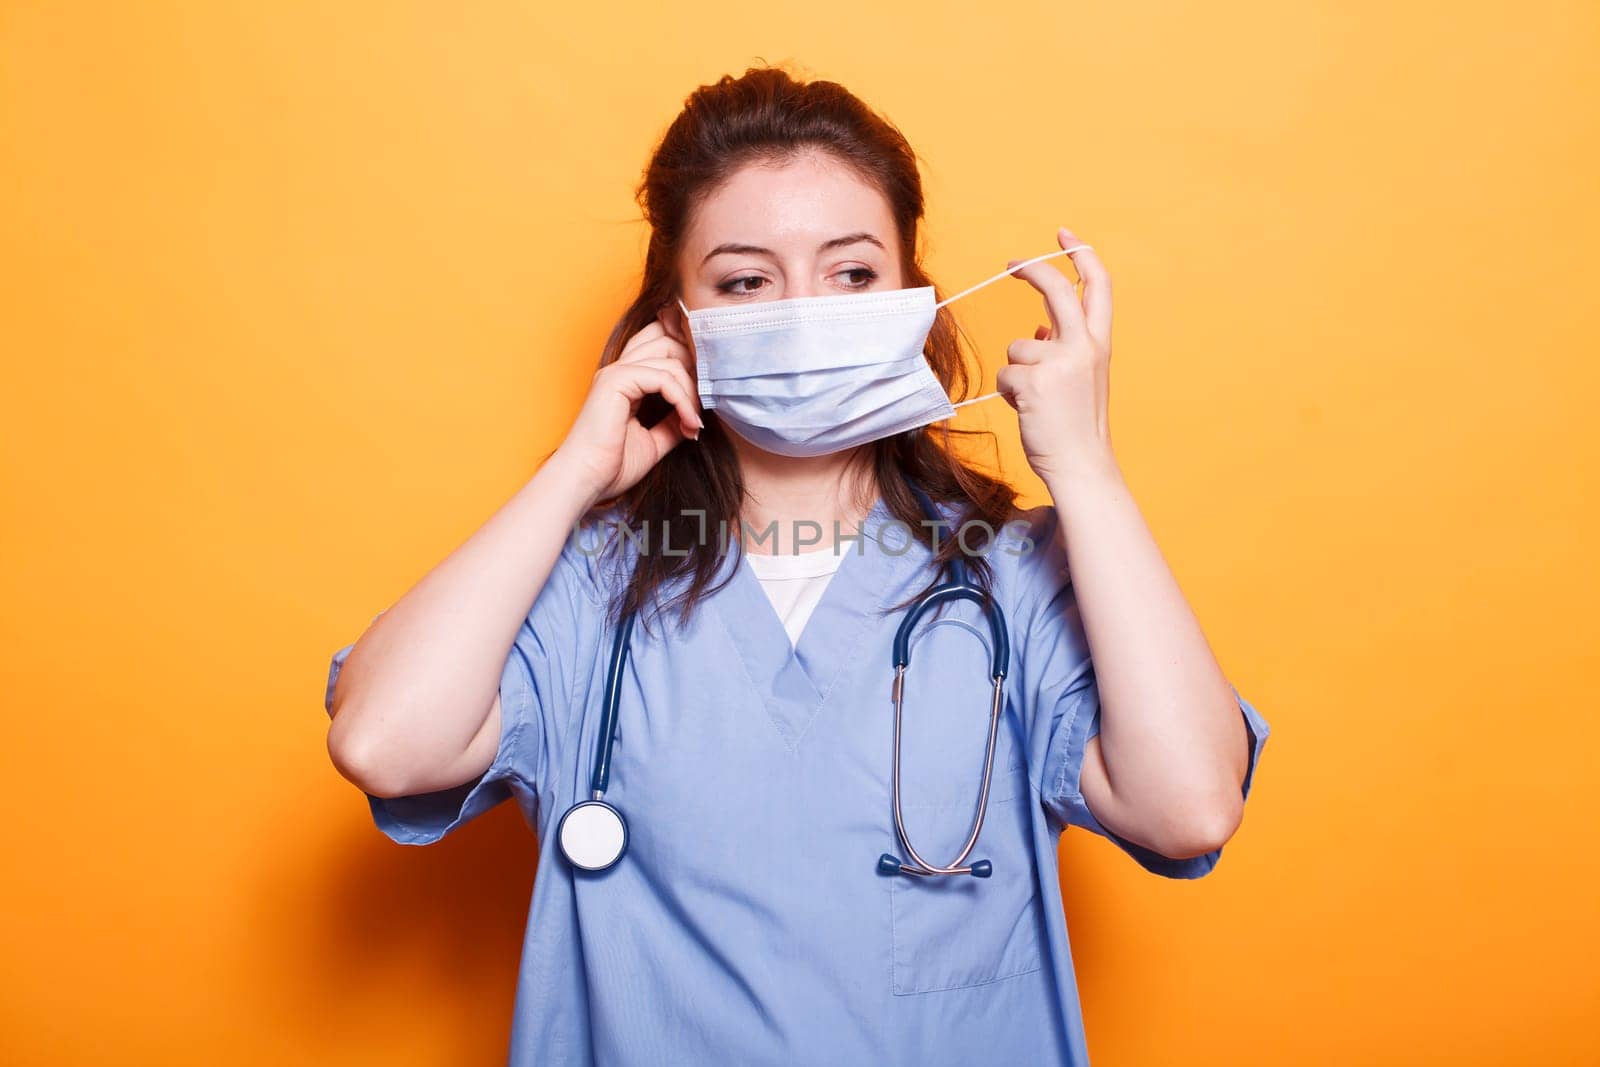 Nurse practitioner putting on face mask by DCStudio